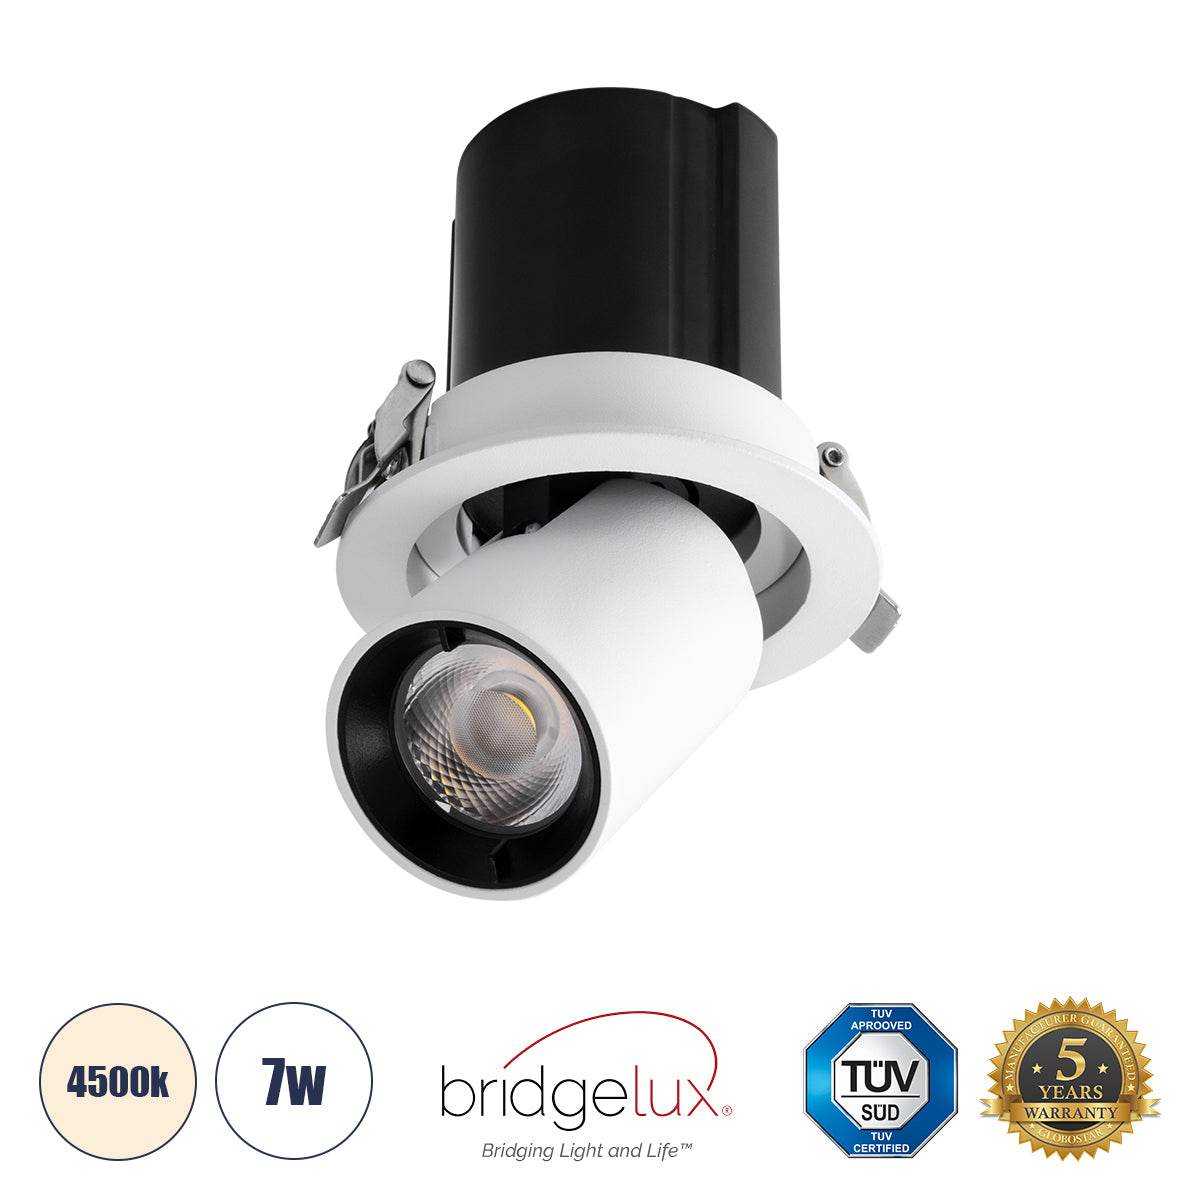 GloboStar® VIRGO-S 60302 Χωνευτό LED Spot Downlight TrimLess Φ9cm 7W 910lm 36° AC 220-240V IP20 Φ9cm x Υ9cm - Στρόγγυλο - Λευκό με Μαύρο Κάτοπτρο - Φυσικό Λευκό 4500K - Bridgelux COB - 5 Years Warranty - ledmania.gr